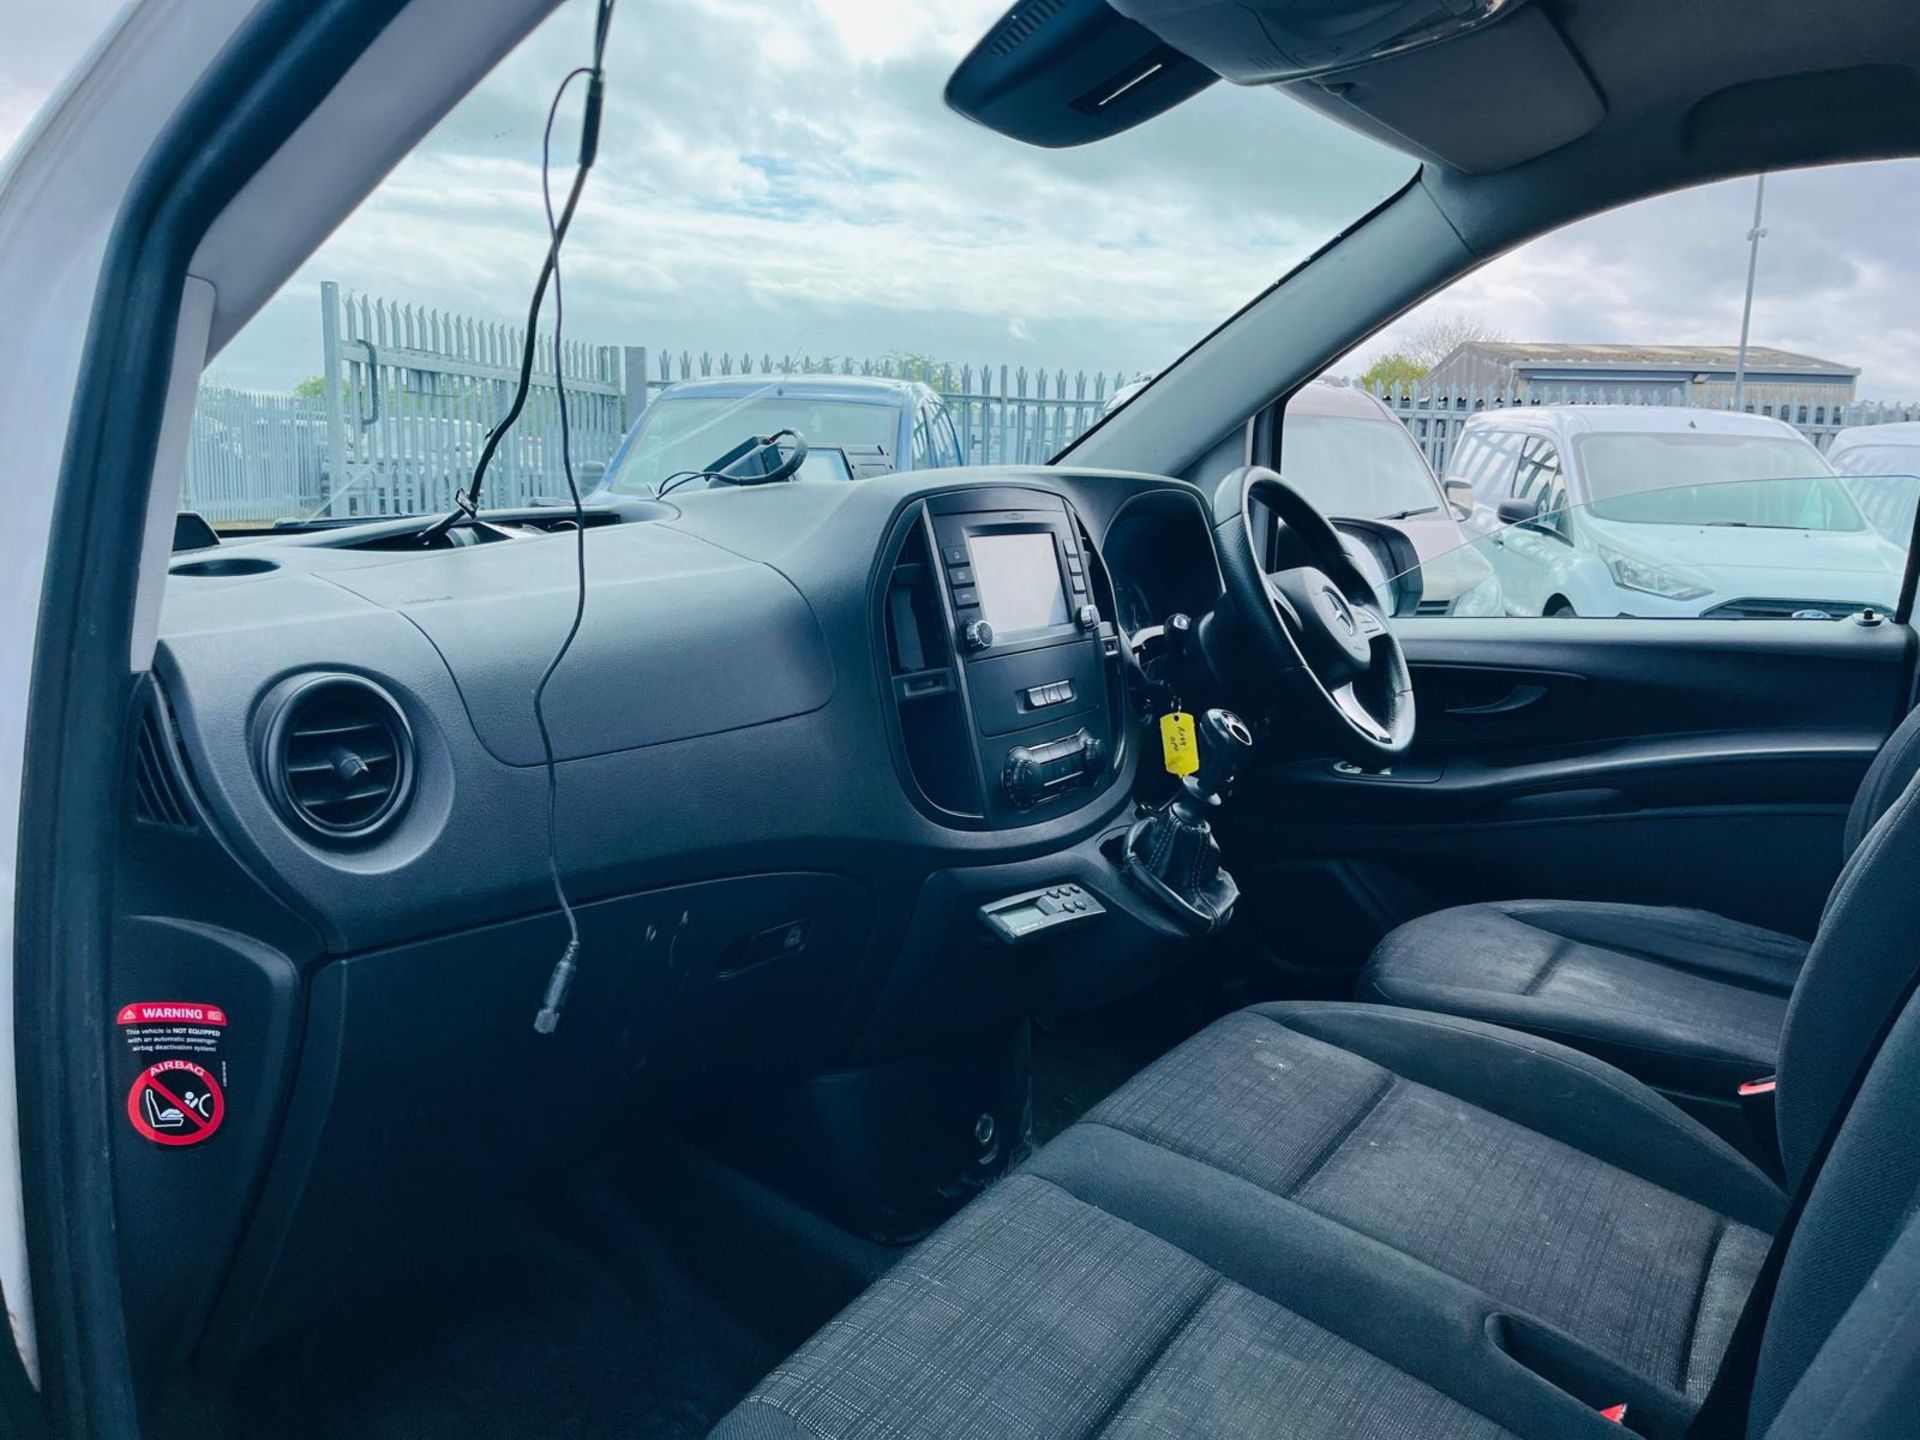 Mercedes Benz Vito 114 CDI RWD Fridge/Freezer 2.1 2019 '69 Reg '-ULEZ Compliant-Parking Sensors-A/C - Image 23 of 27